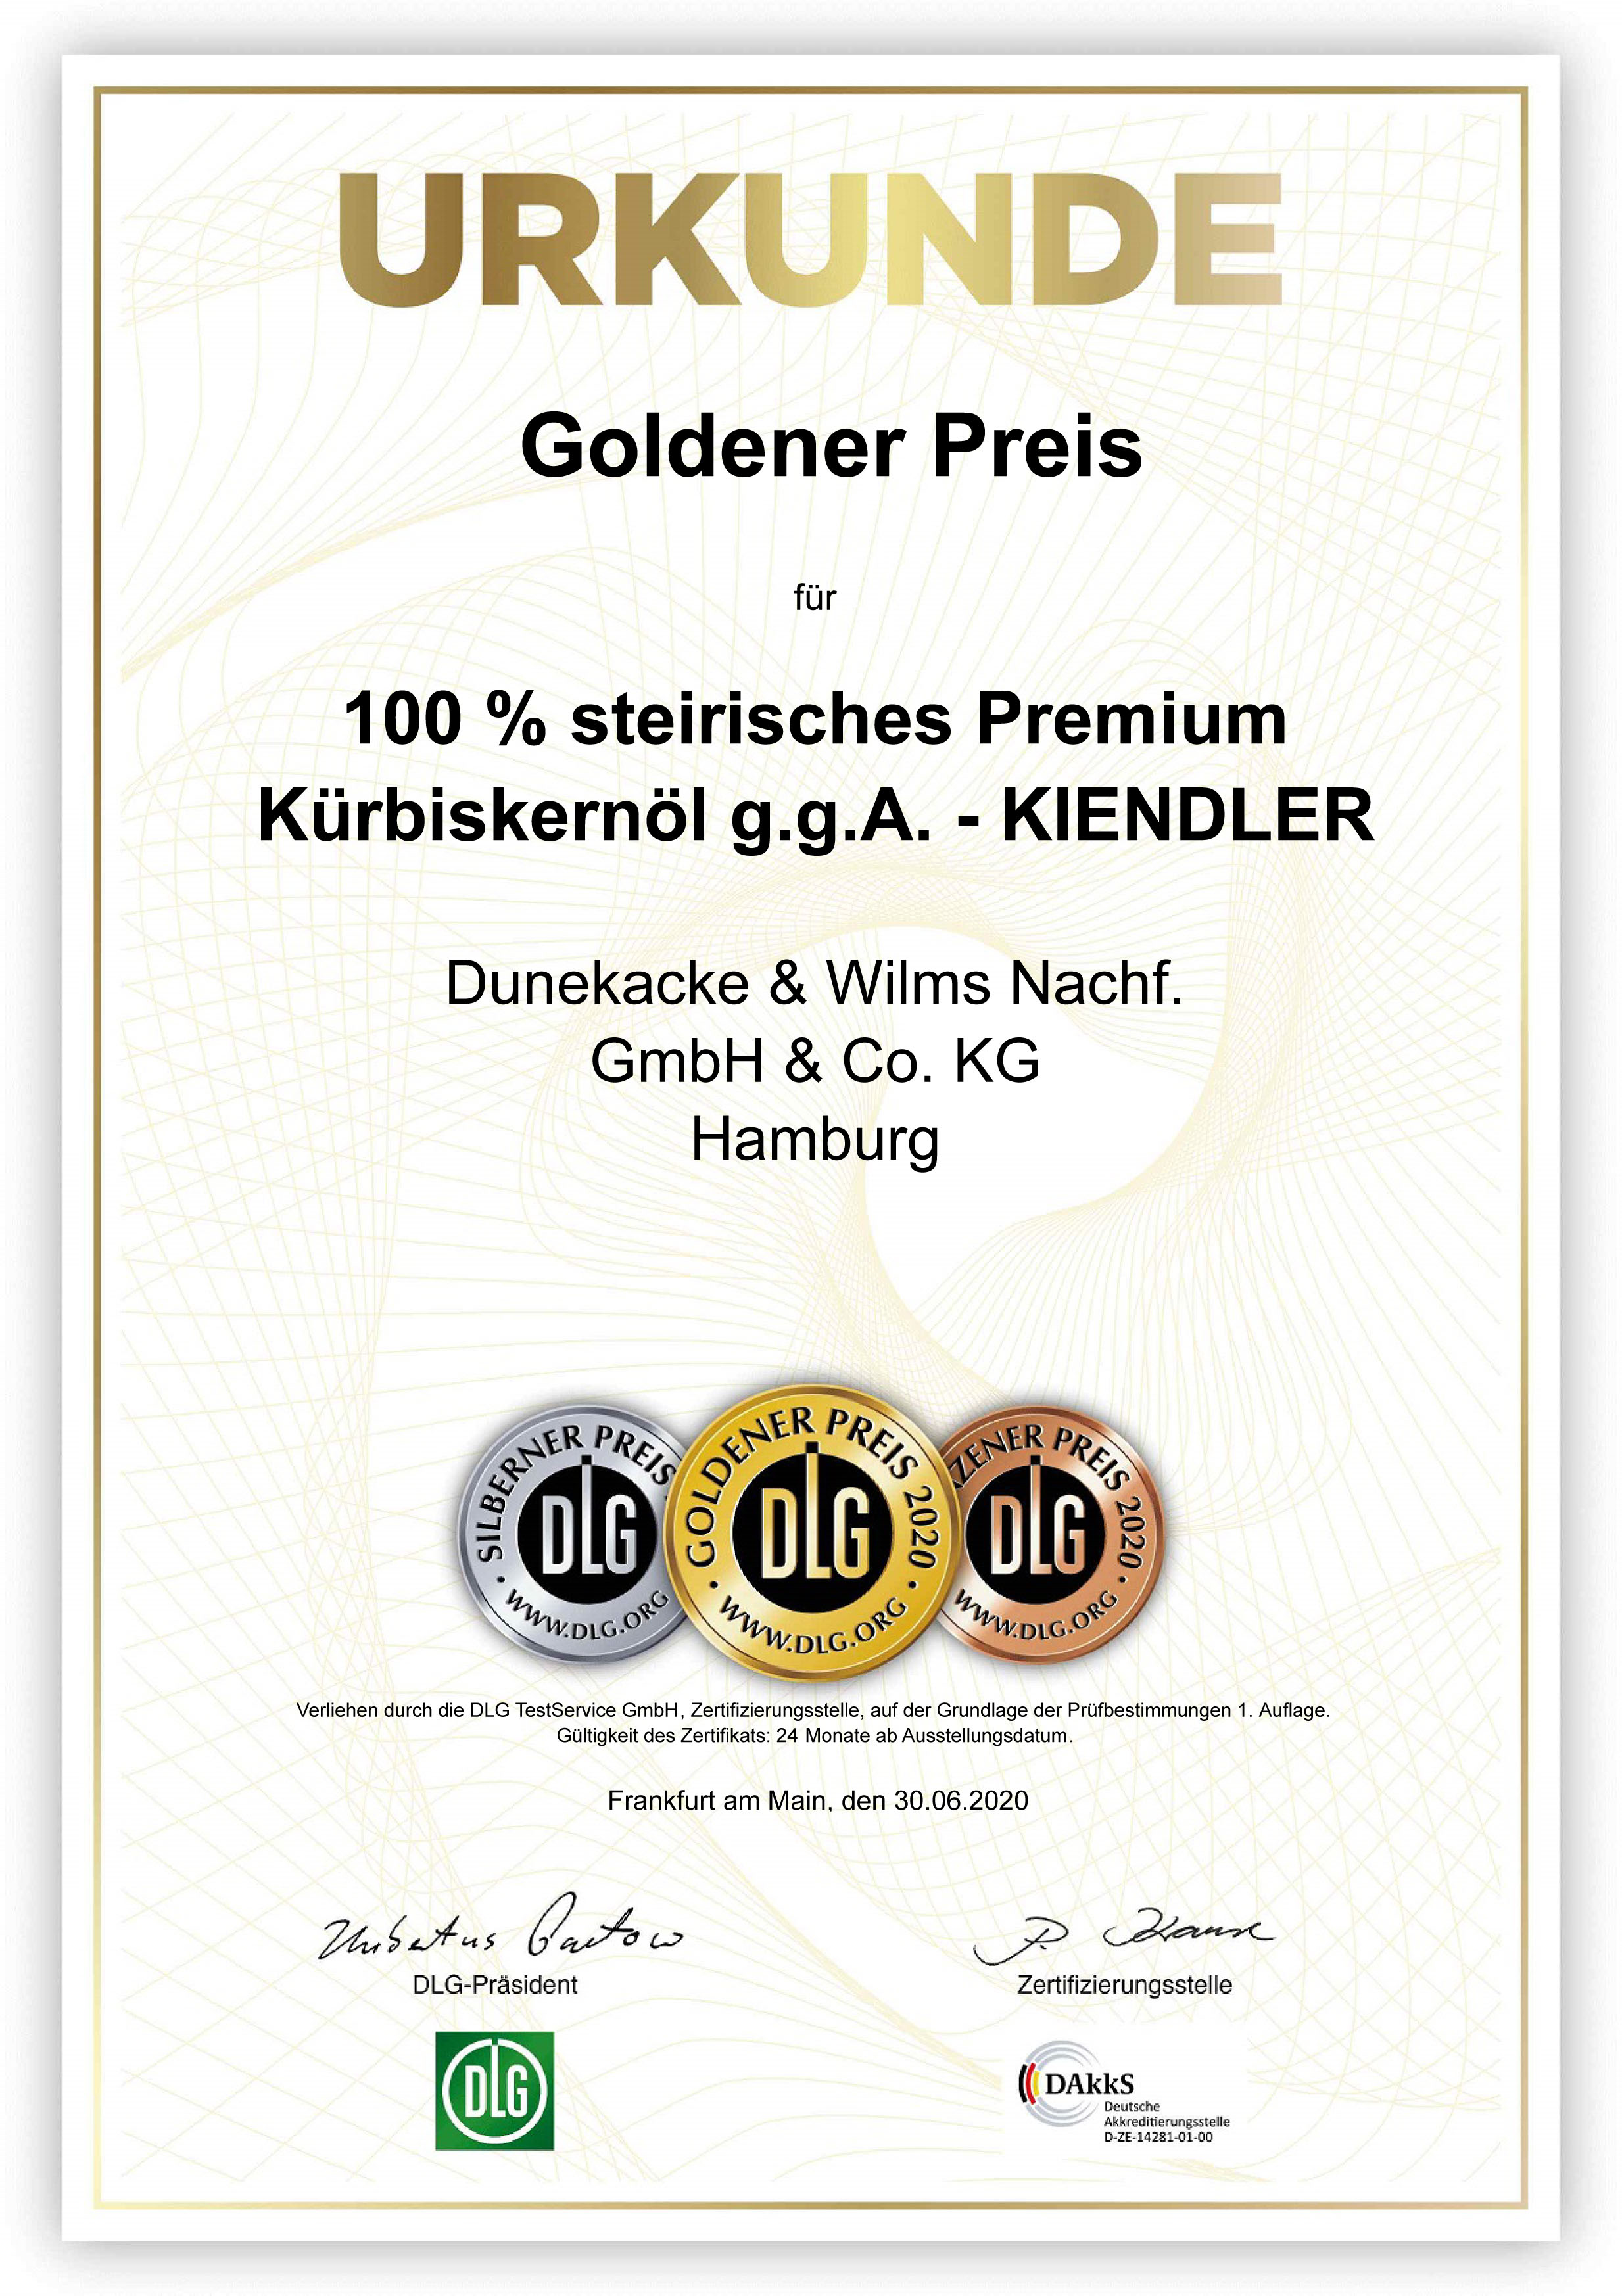 DLG-Pramierung GOLD, Kürbiskernöl KIENDLER 2020